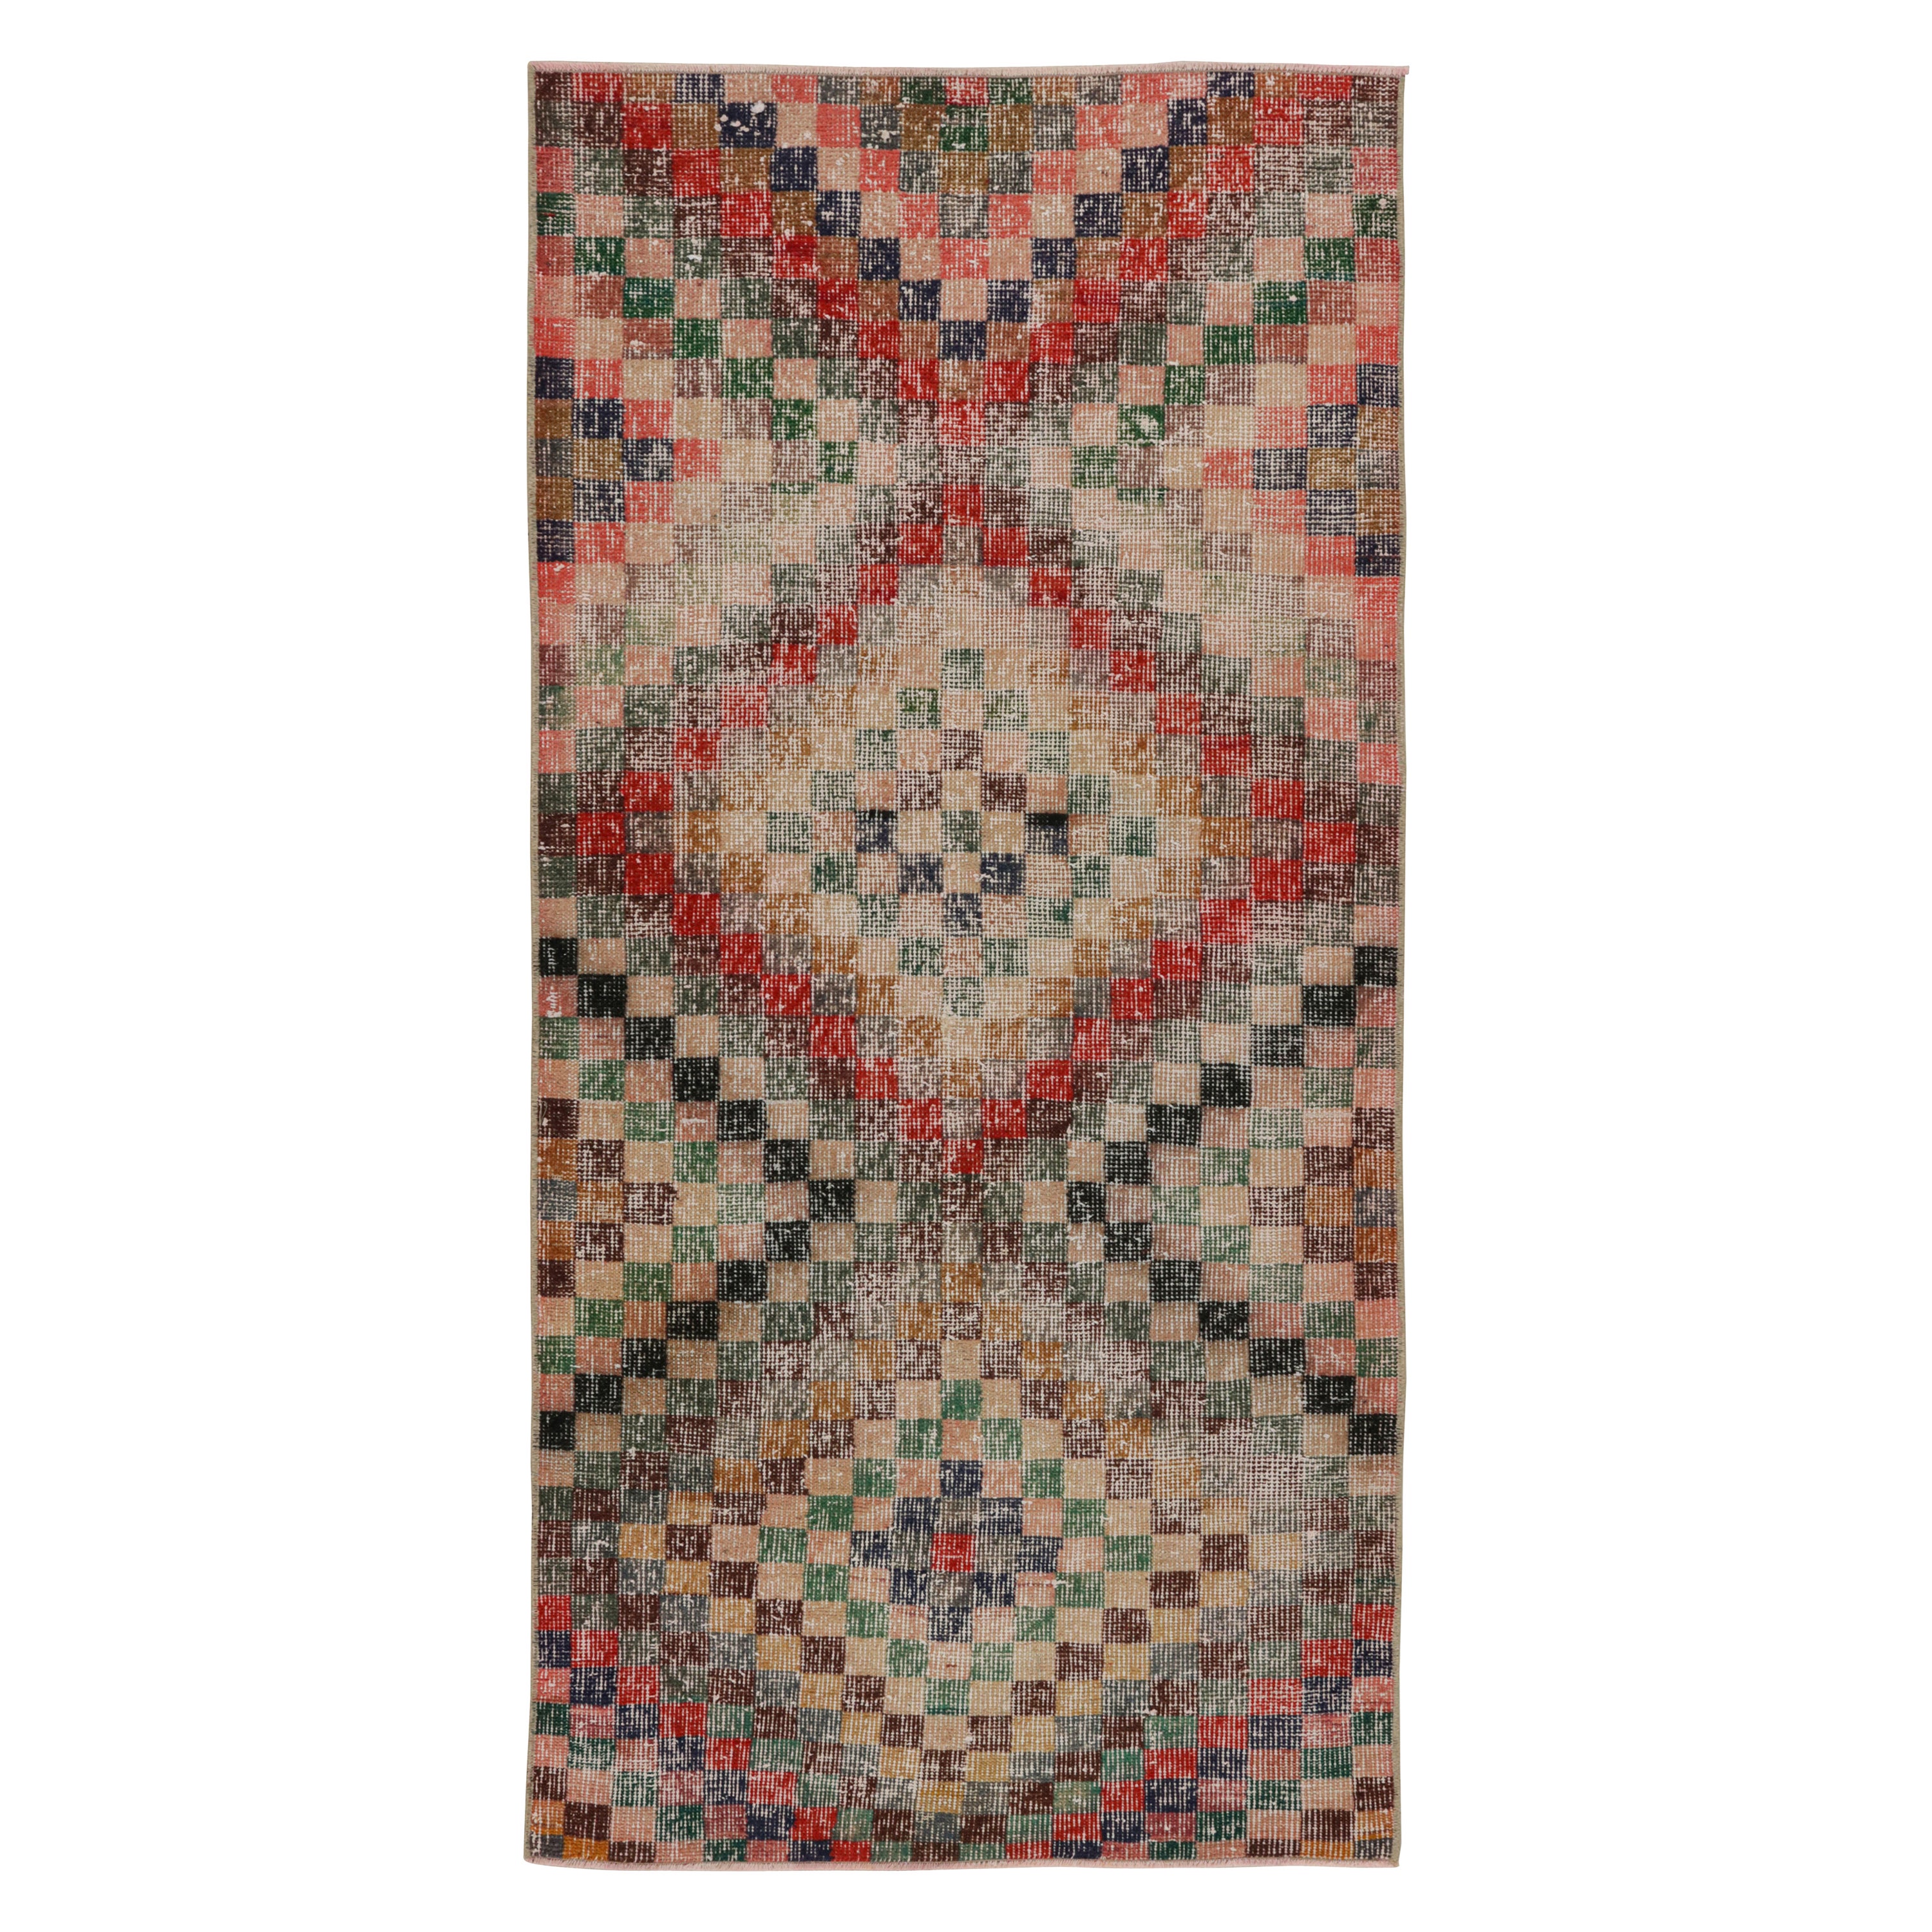 Vintage Zeki Müren Runner Rug, with Geometric Patterns, from Rug & Kilim